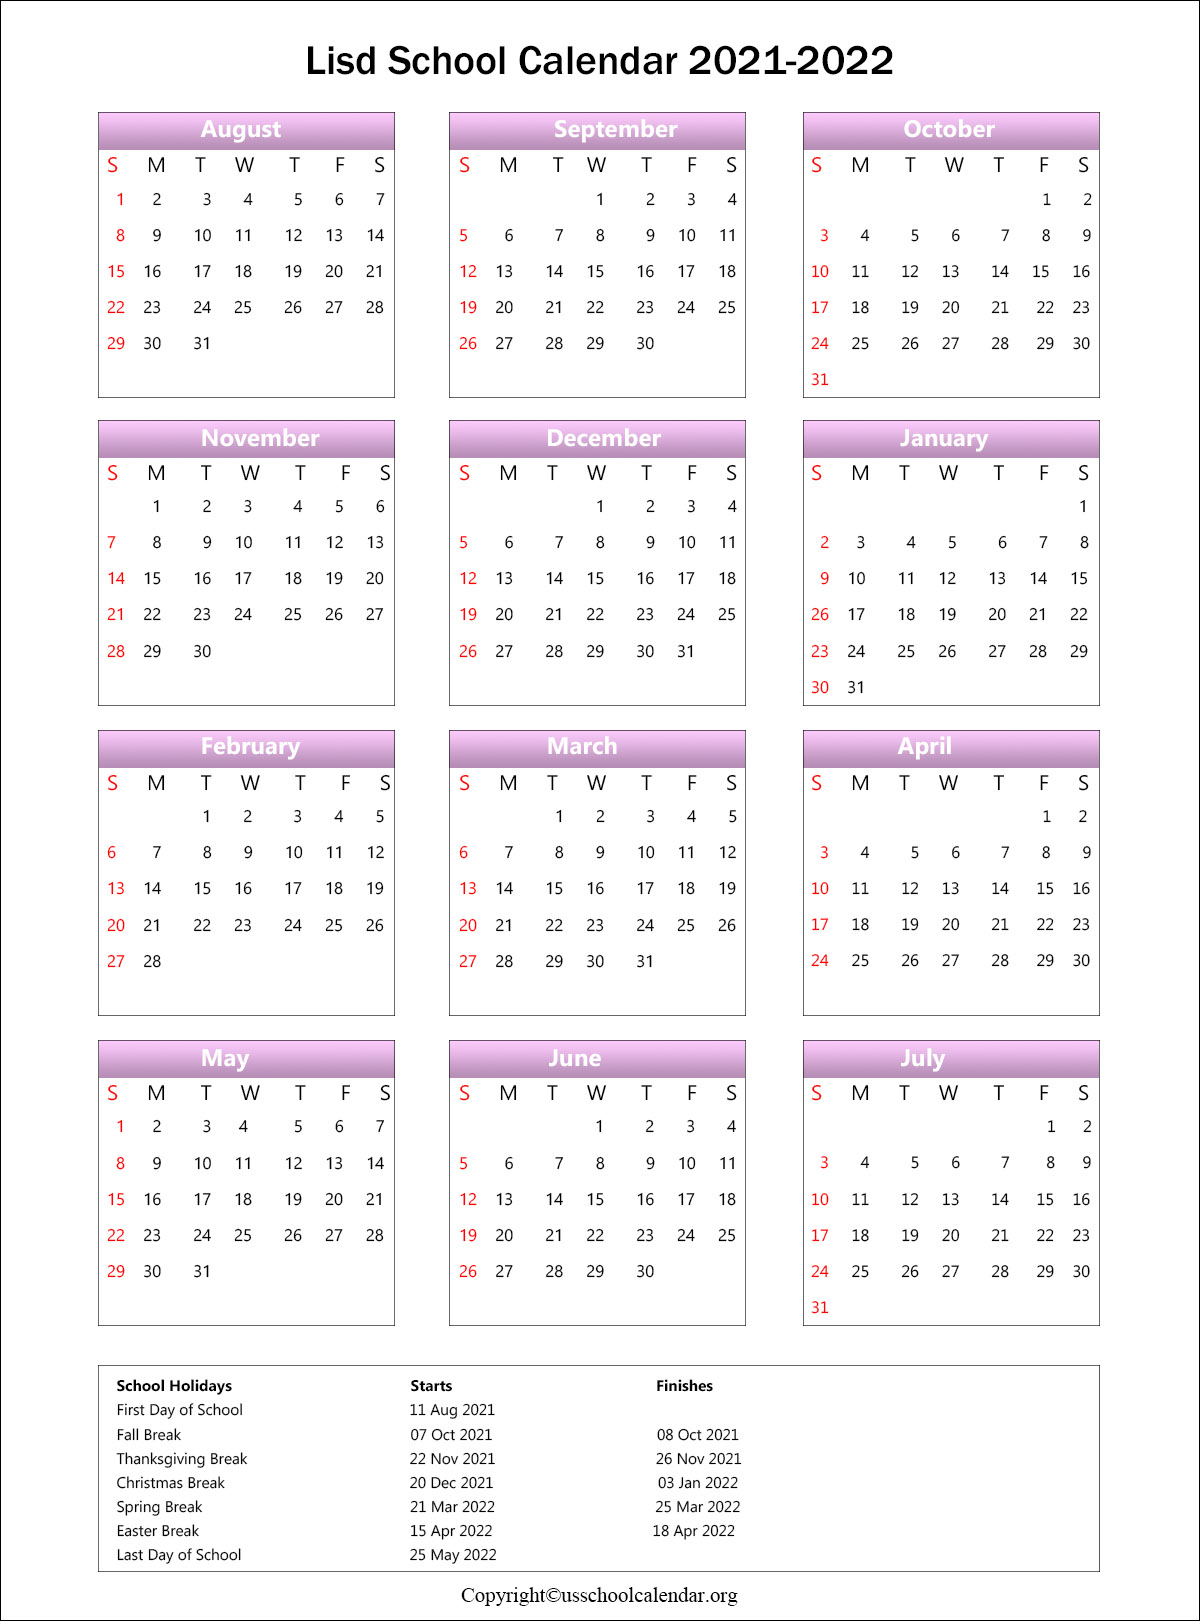 Lisd Calendar 2022 Lisd School Calendar With Holidays 2021-2022 (Lewisville Isd School)